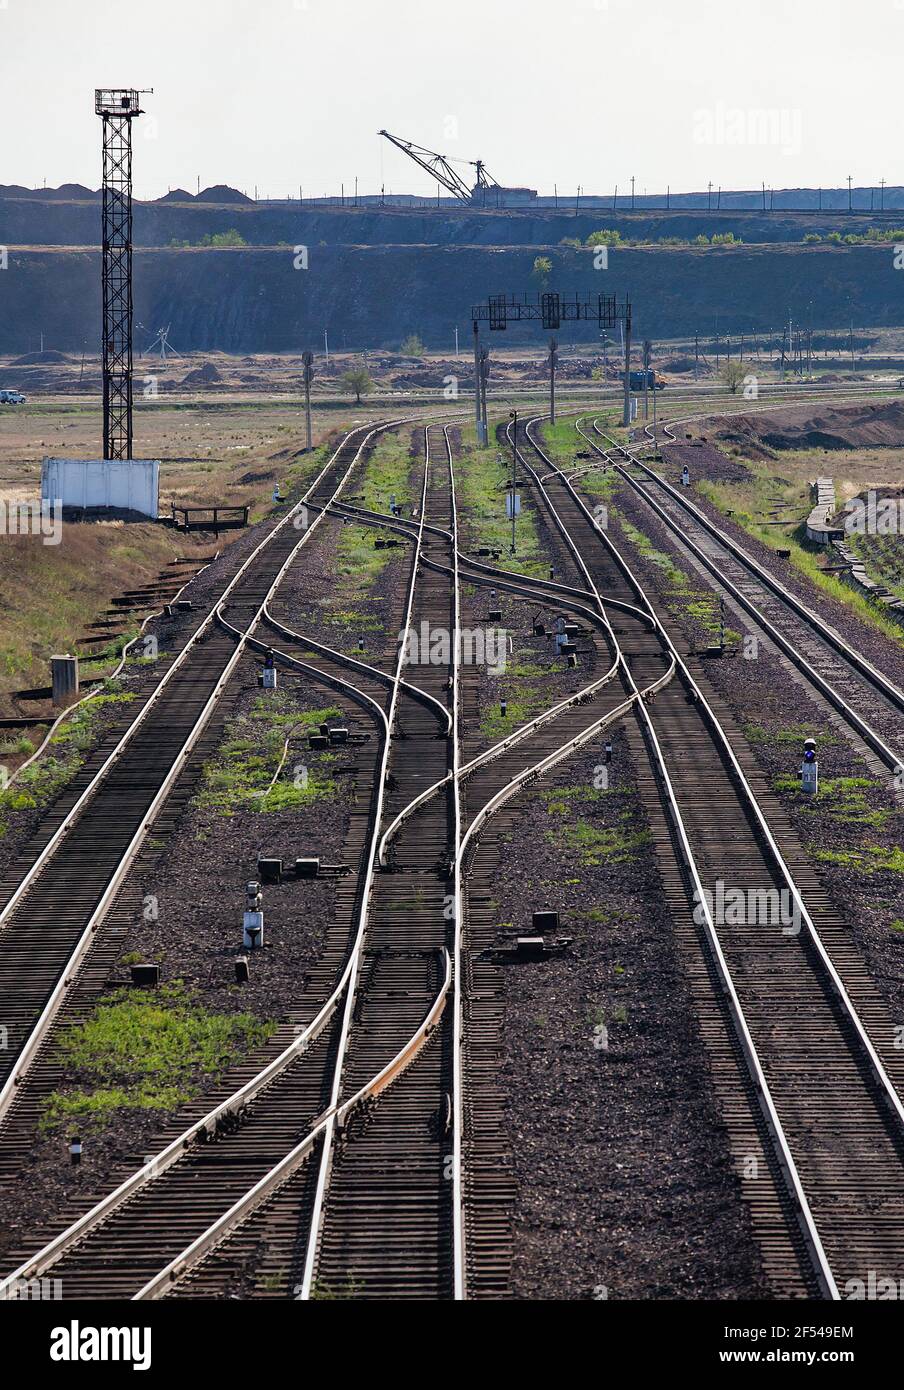 Railway station 'Bogatyr' near coal quarry. Rail tracks and dragline excavator on background. Ekibastuz, Kazakhstan. Stock Photo